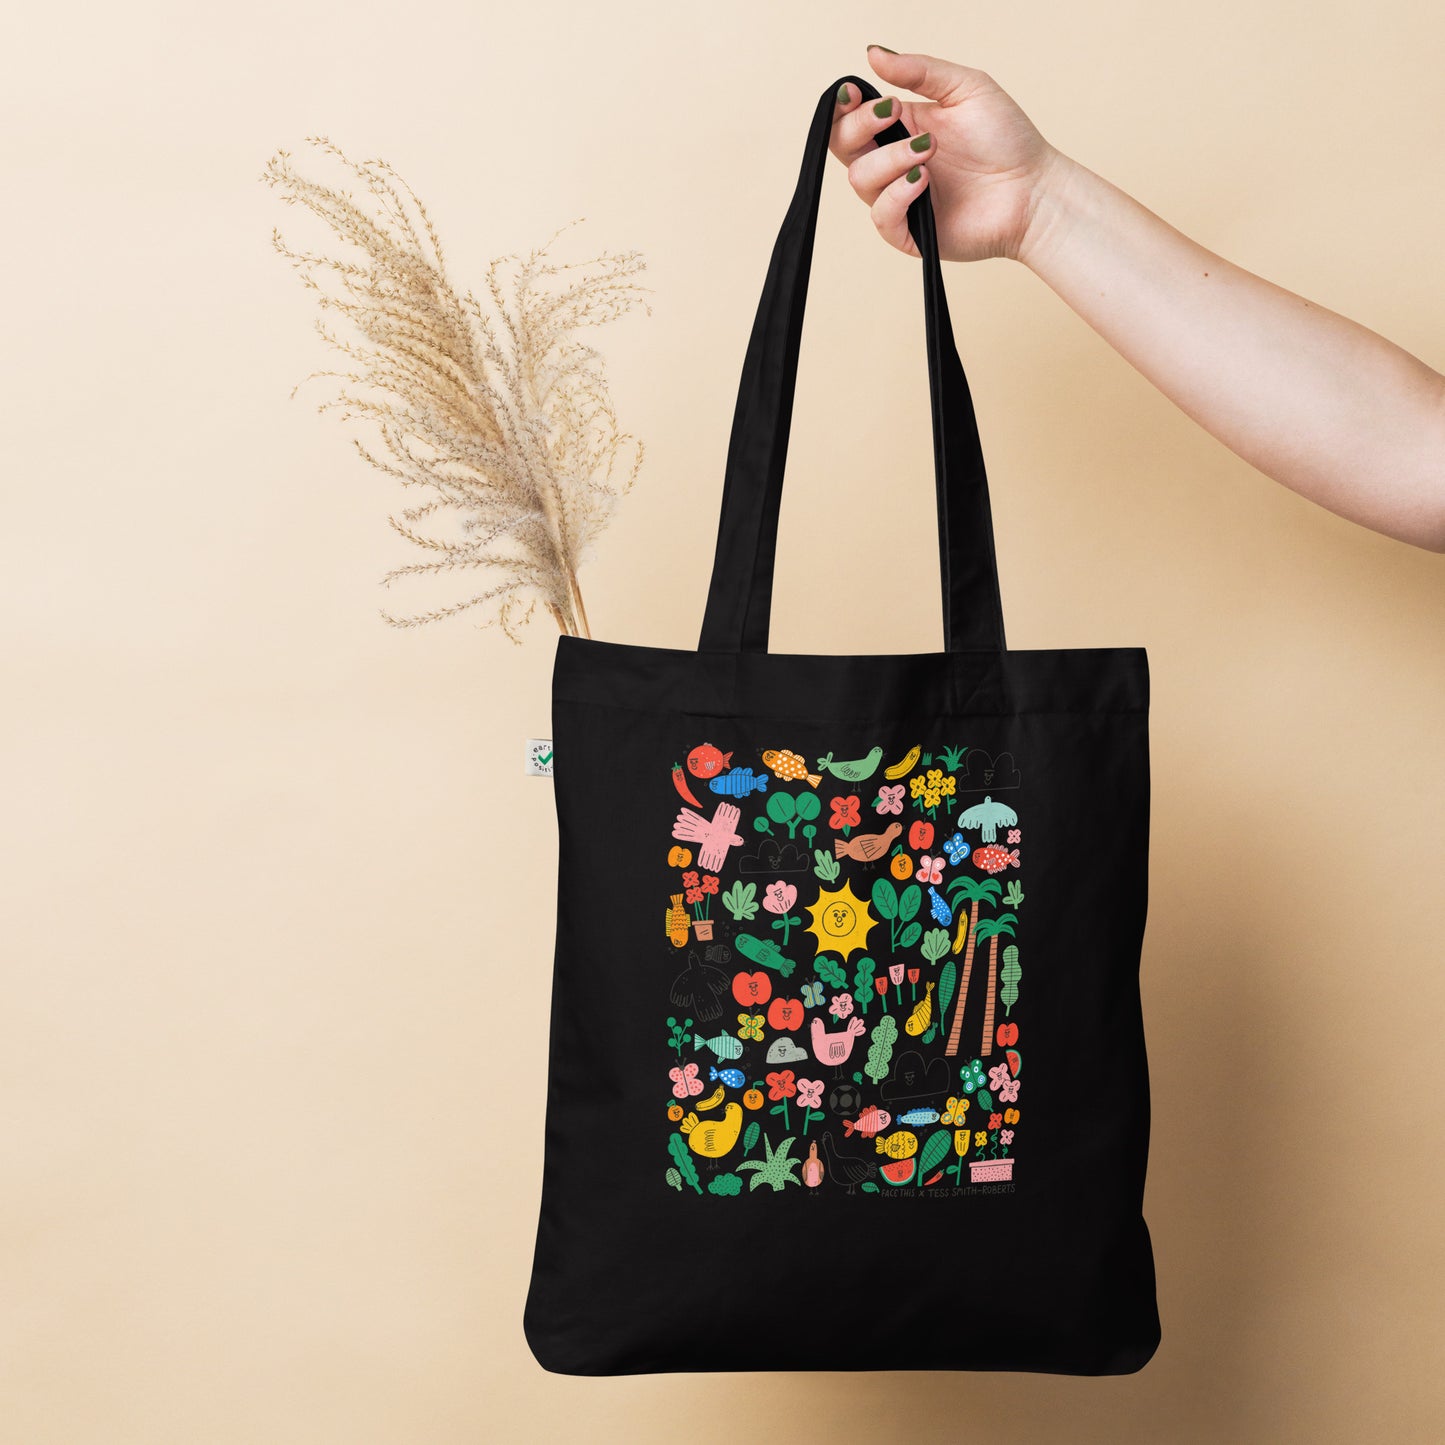 Tess Smith-Roberts x Face This Organic fashion tote bag